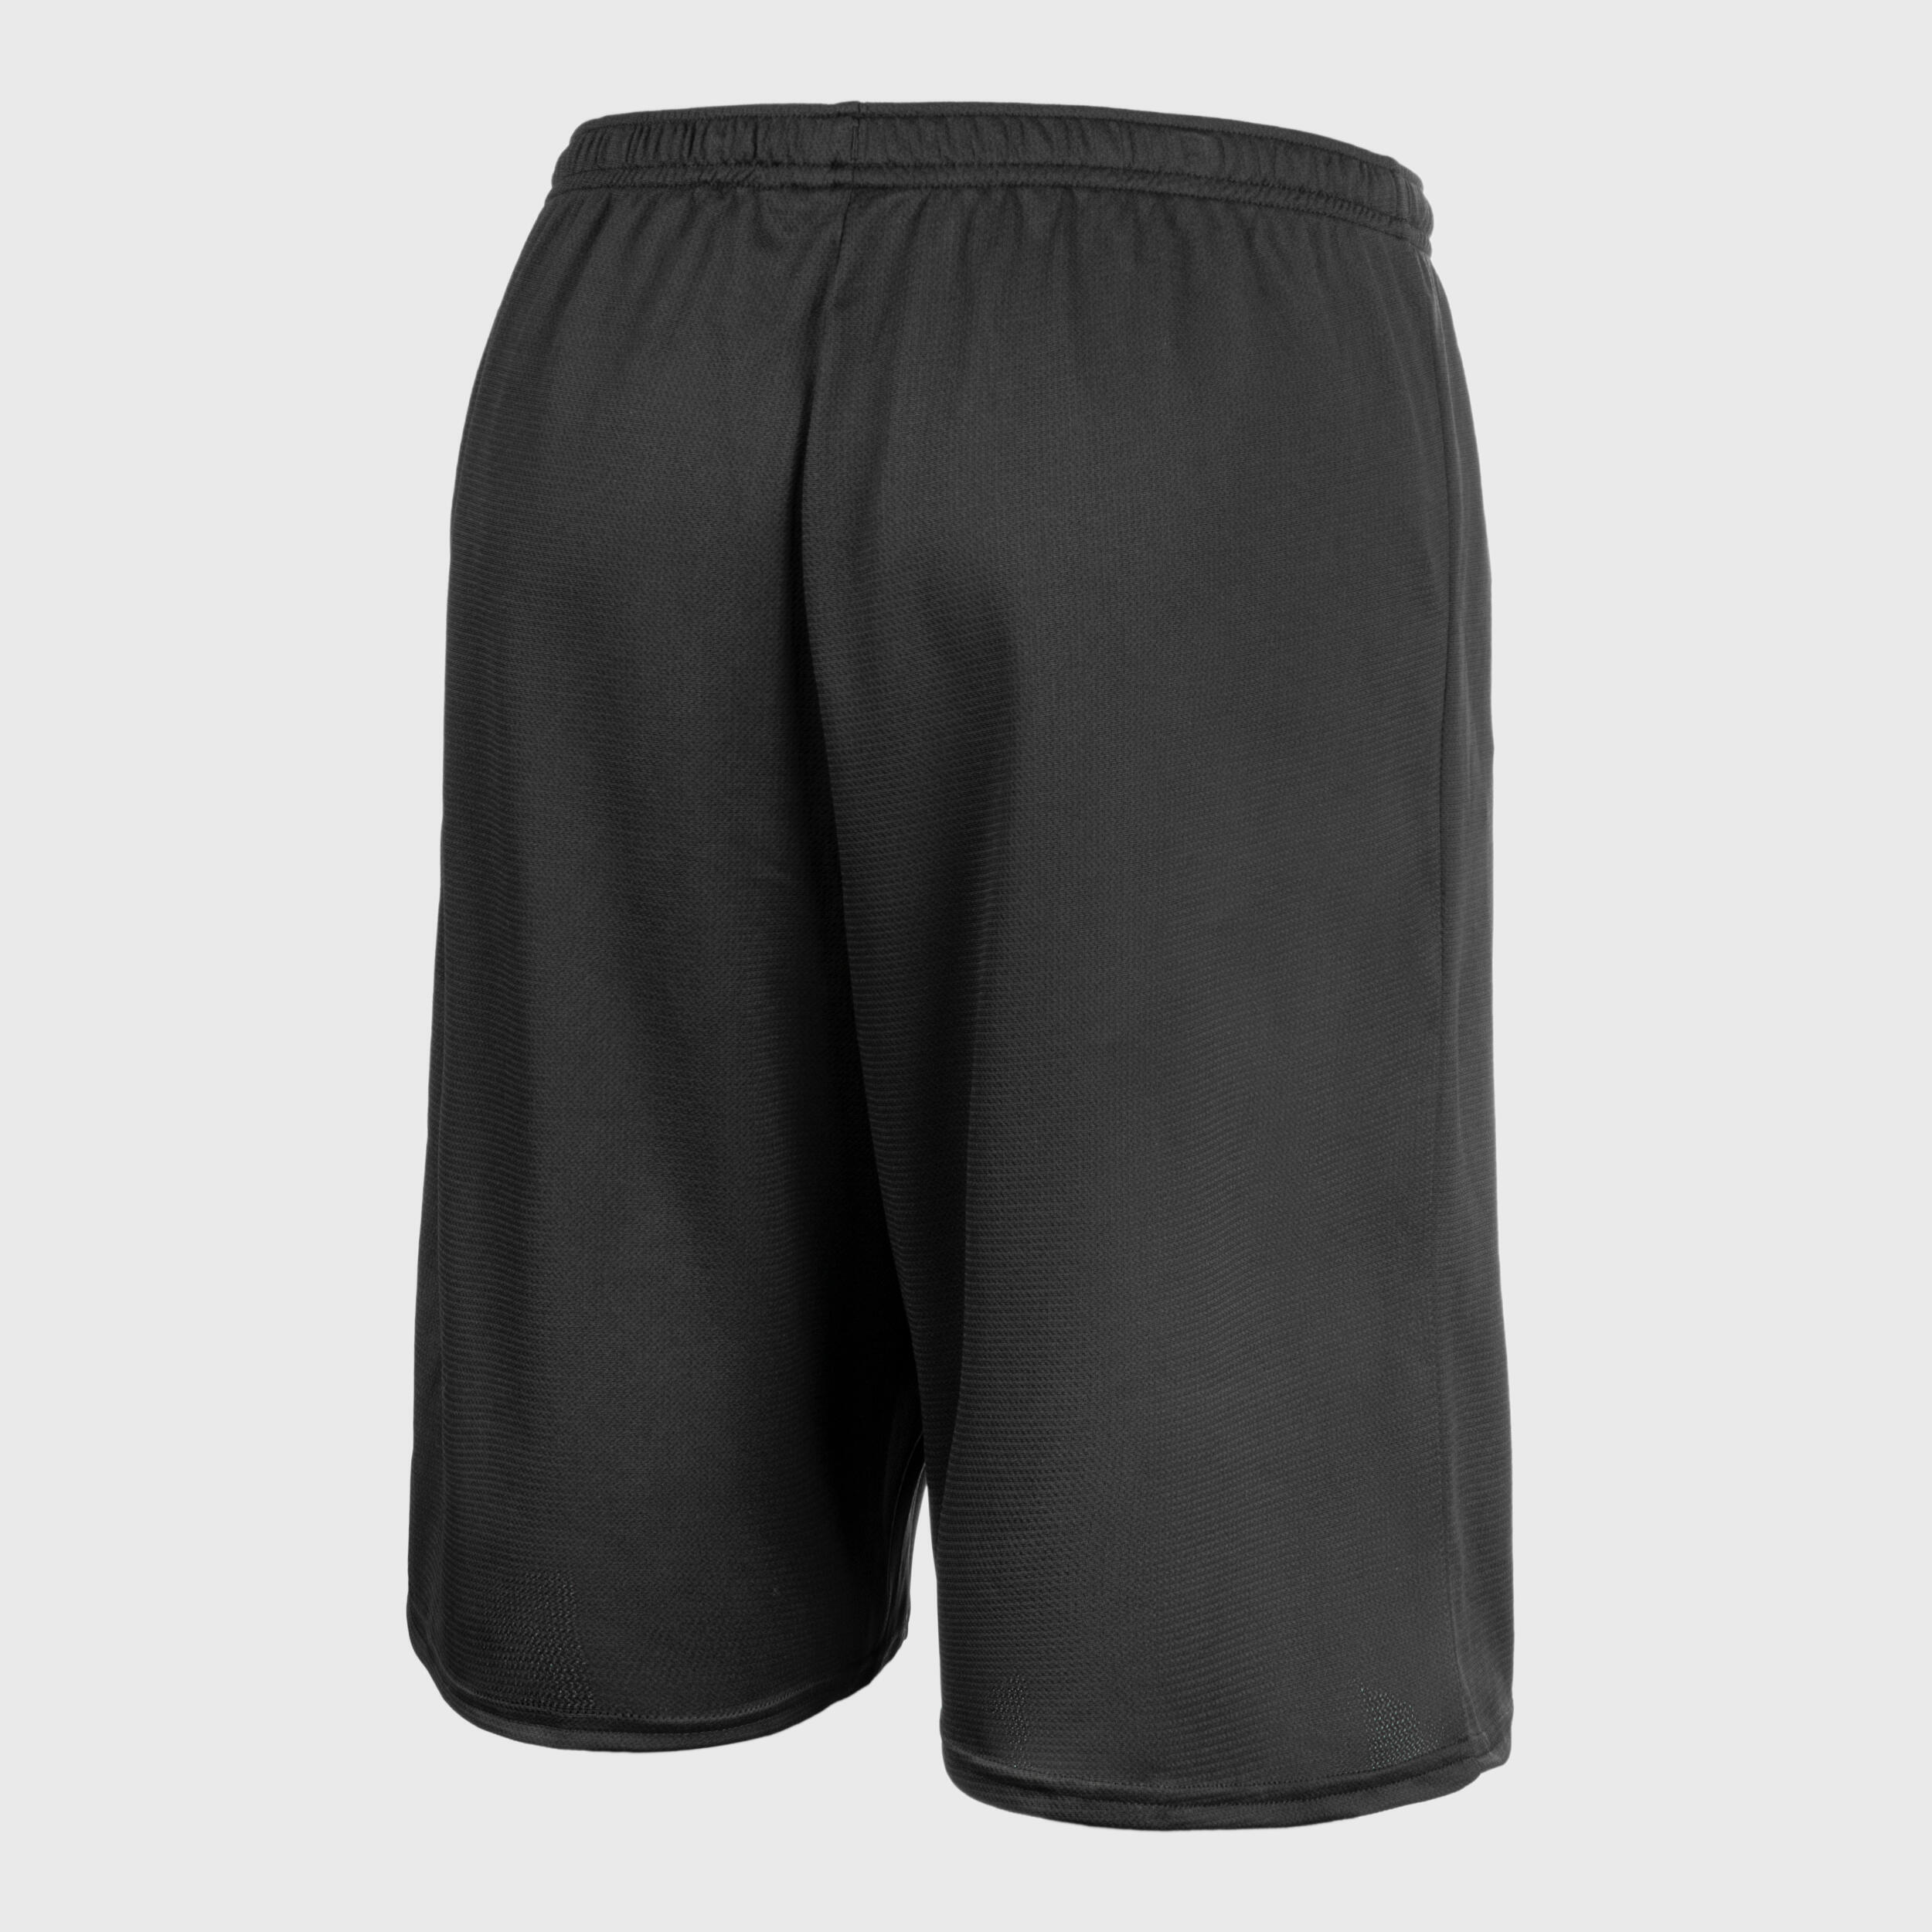 Men's/Women's Basketball Shorts SH100 - Black 4/4